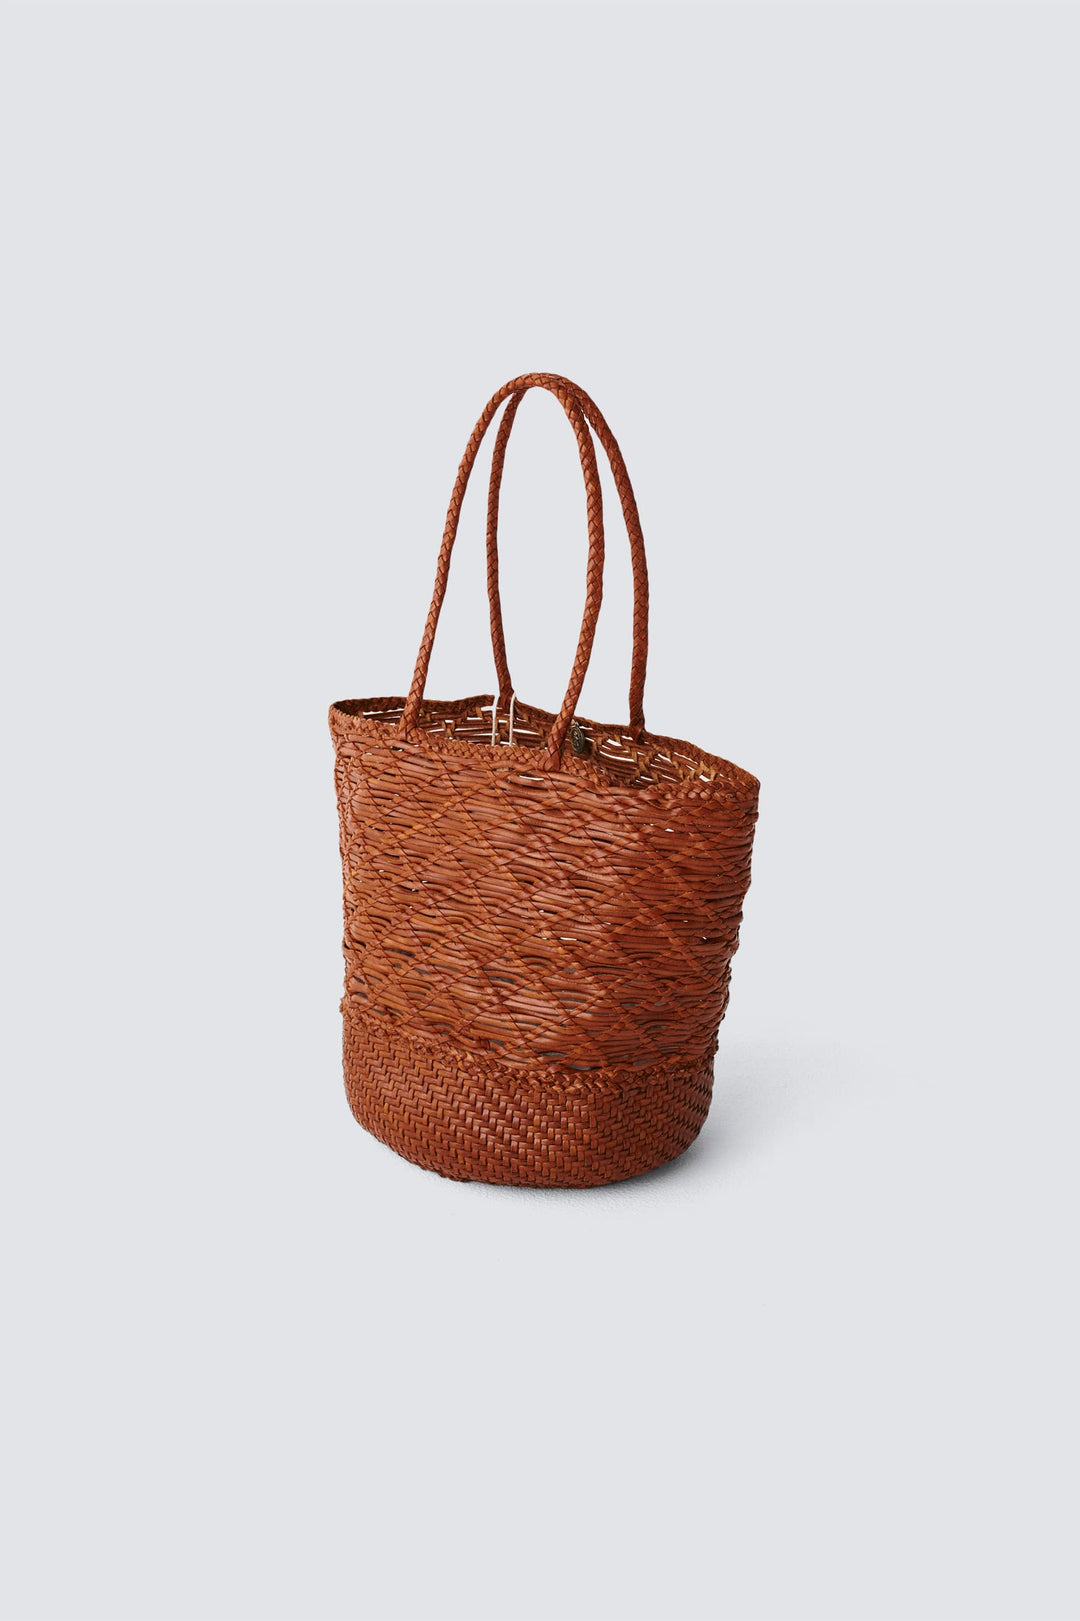 Dragon Diffusion woven leather bag handmade - Corso Bucket Tan